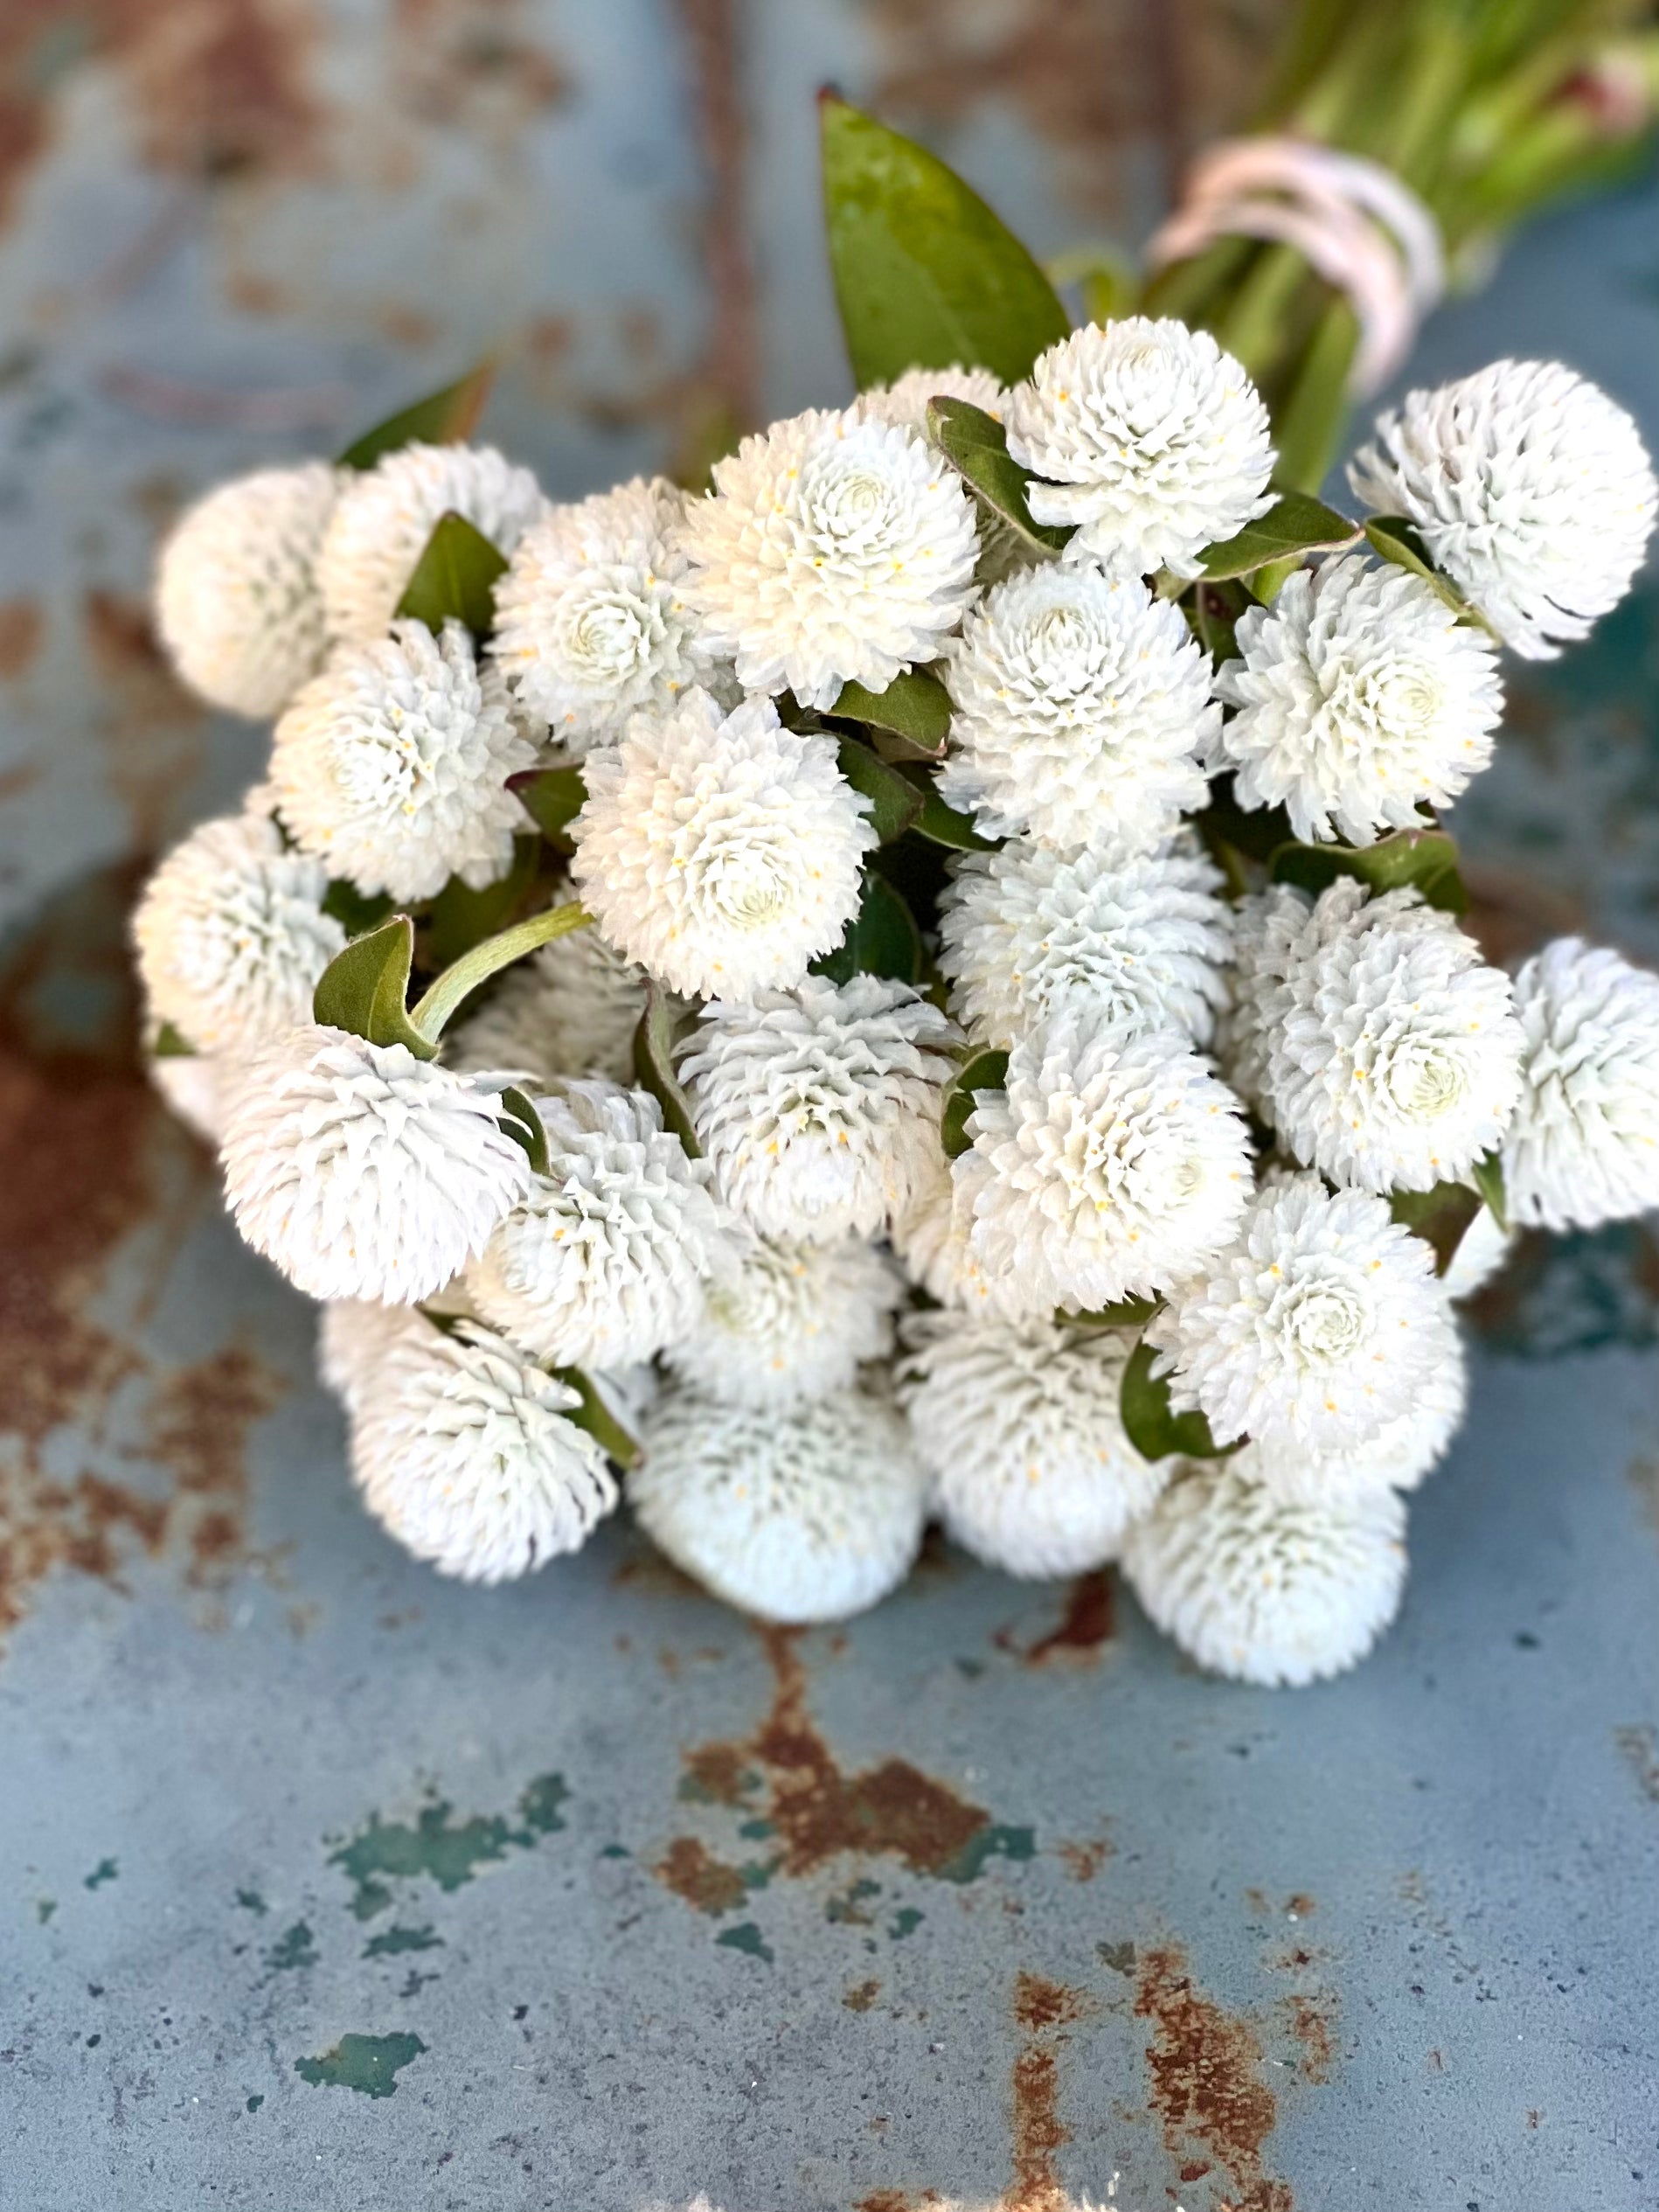 globe amaranth white gomphrena for cut flowers